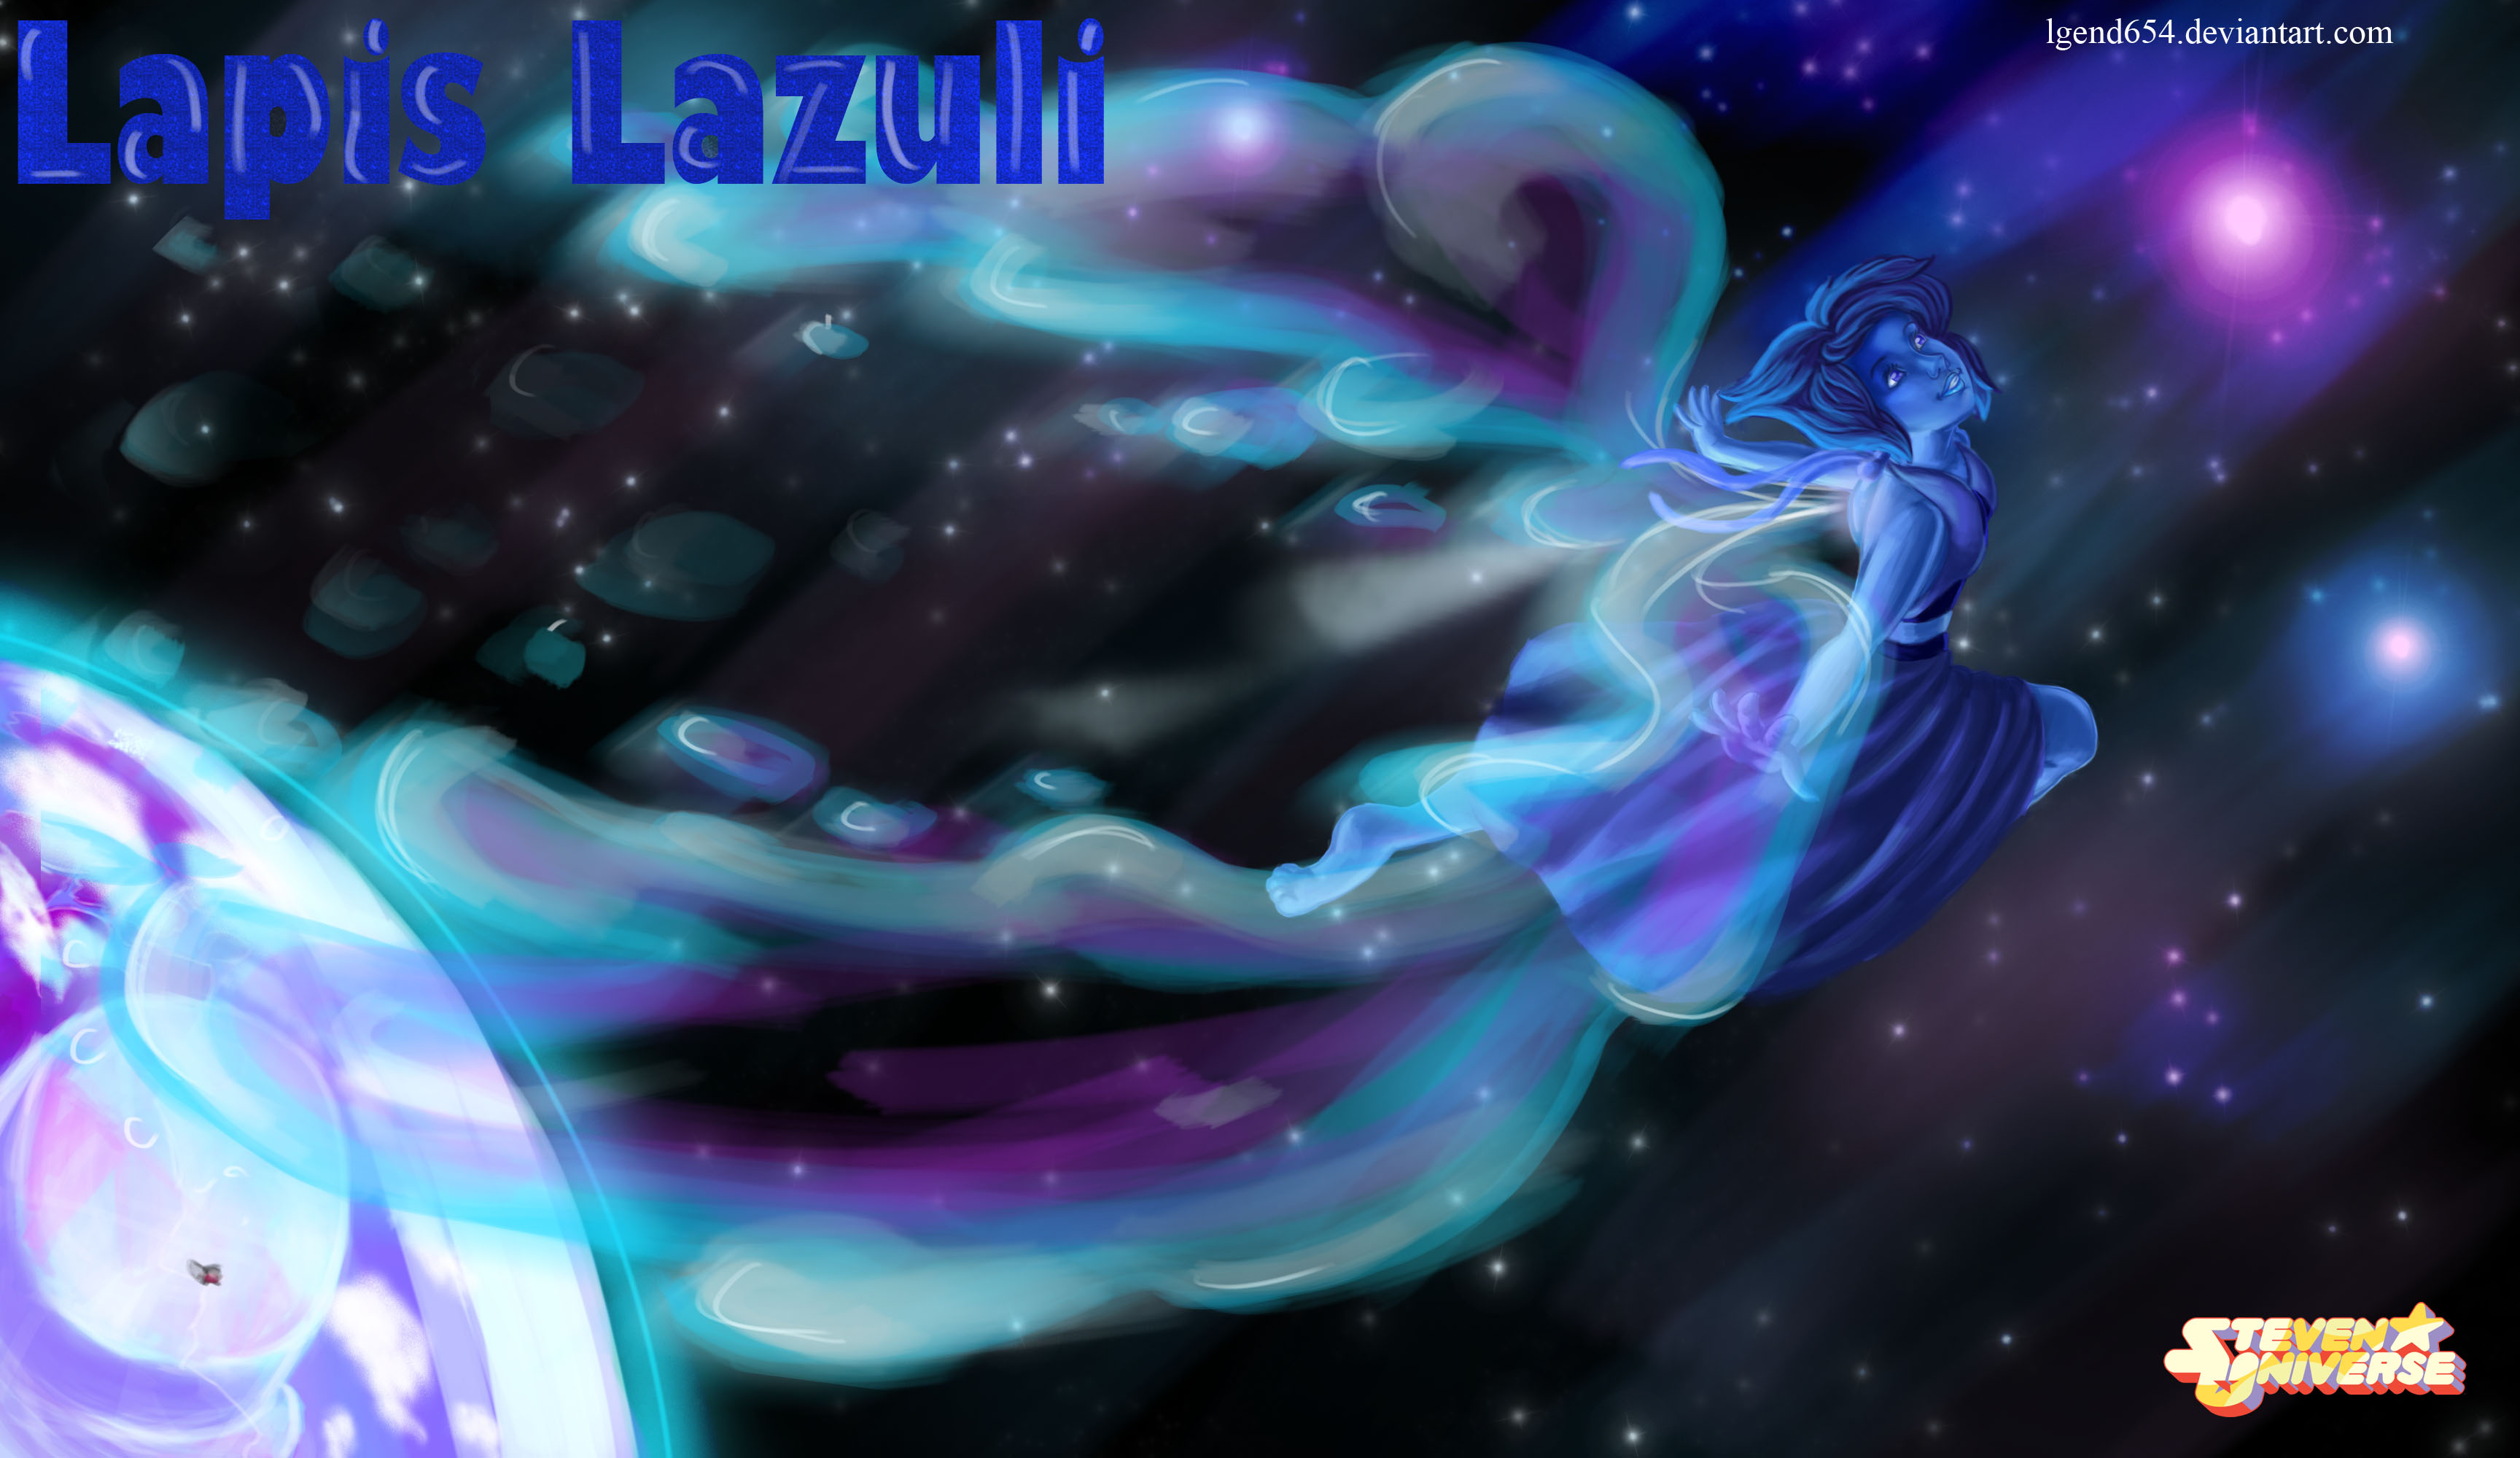 Lapis Lazuli Steven Universe wallpaper by legend654 on DeviantArt